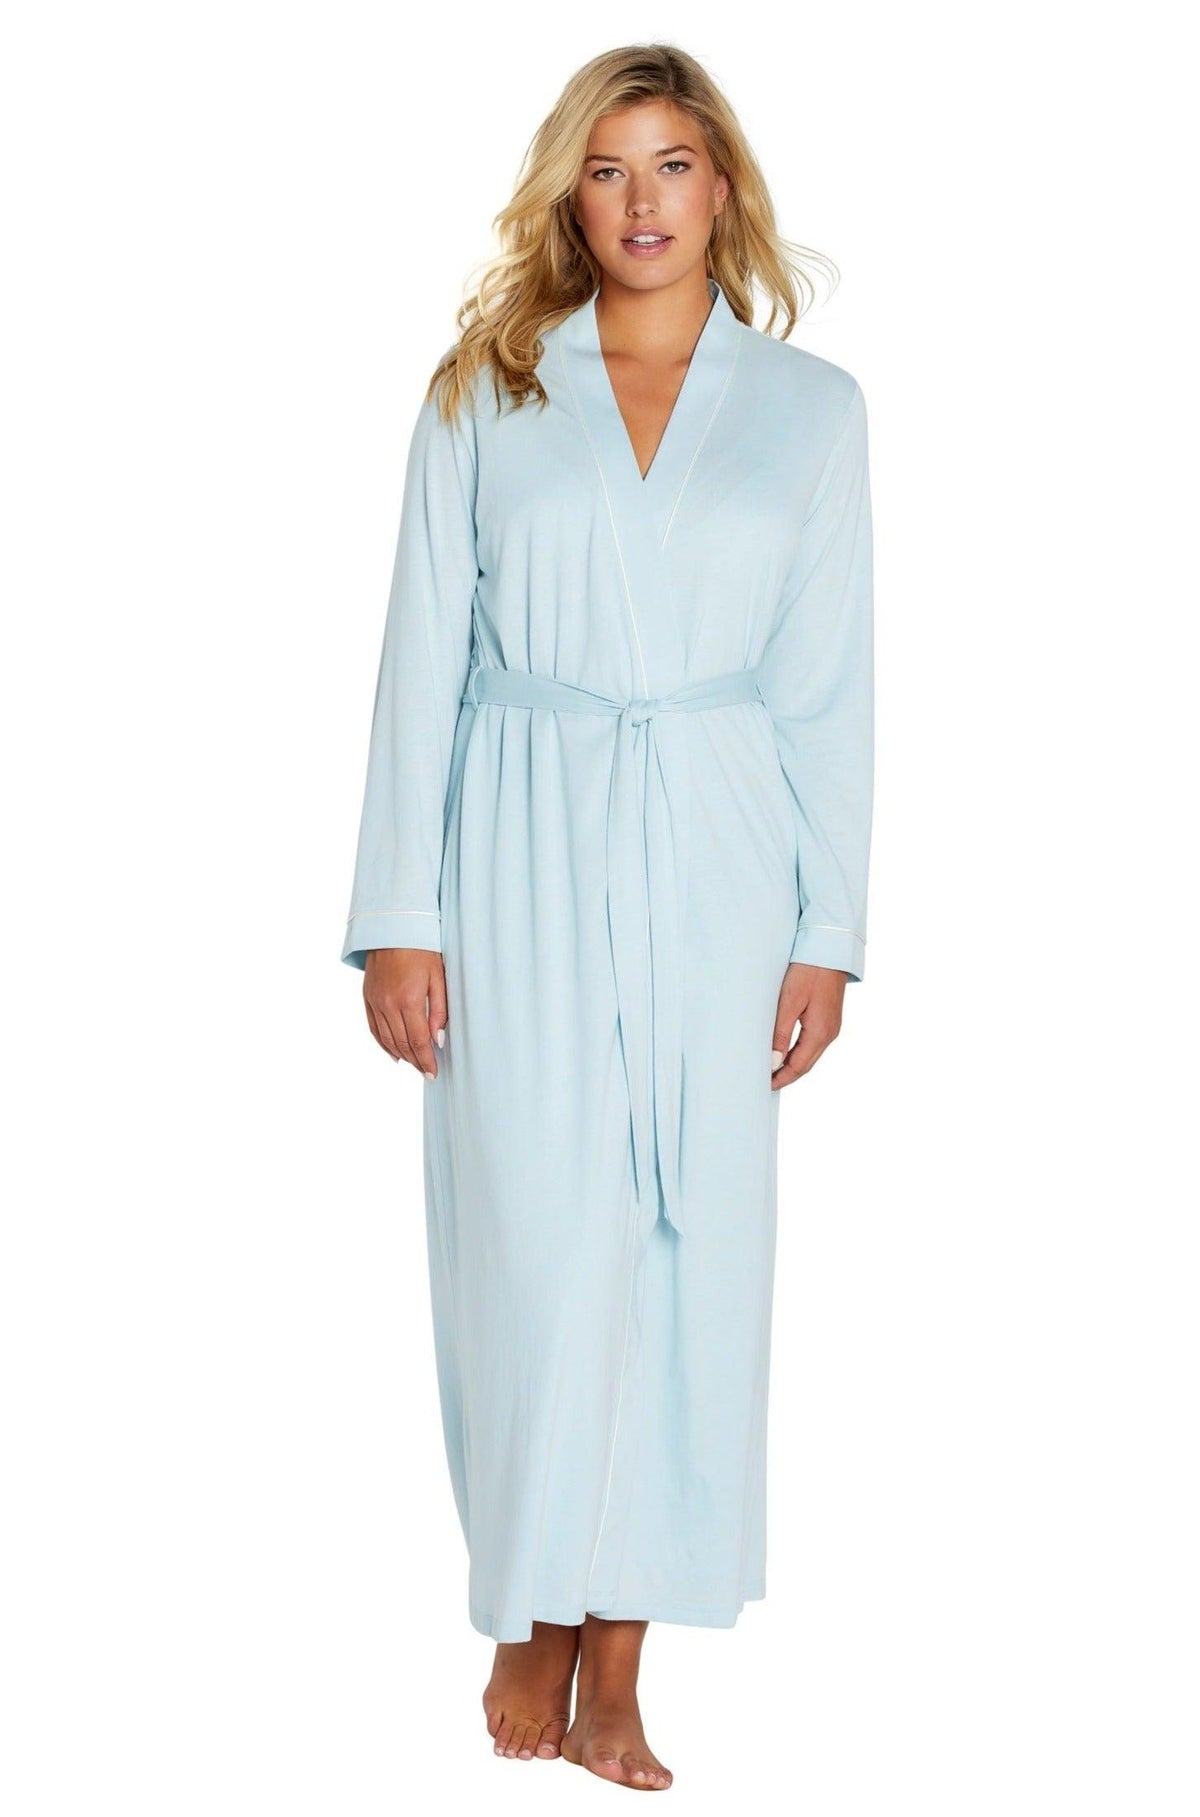 Alissa Long Sleeve Full Length Robe - Sales Rack - BUp Pajamas Robe www.buppajamas.net